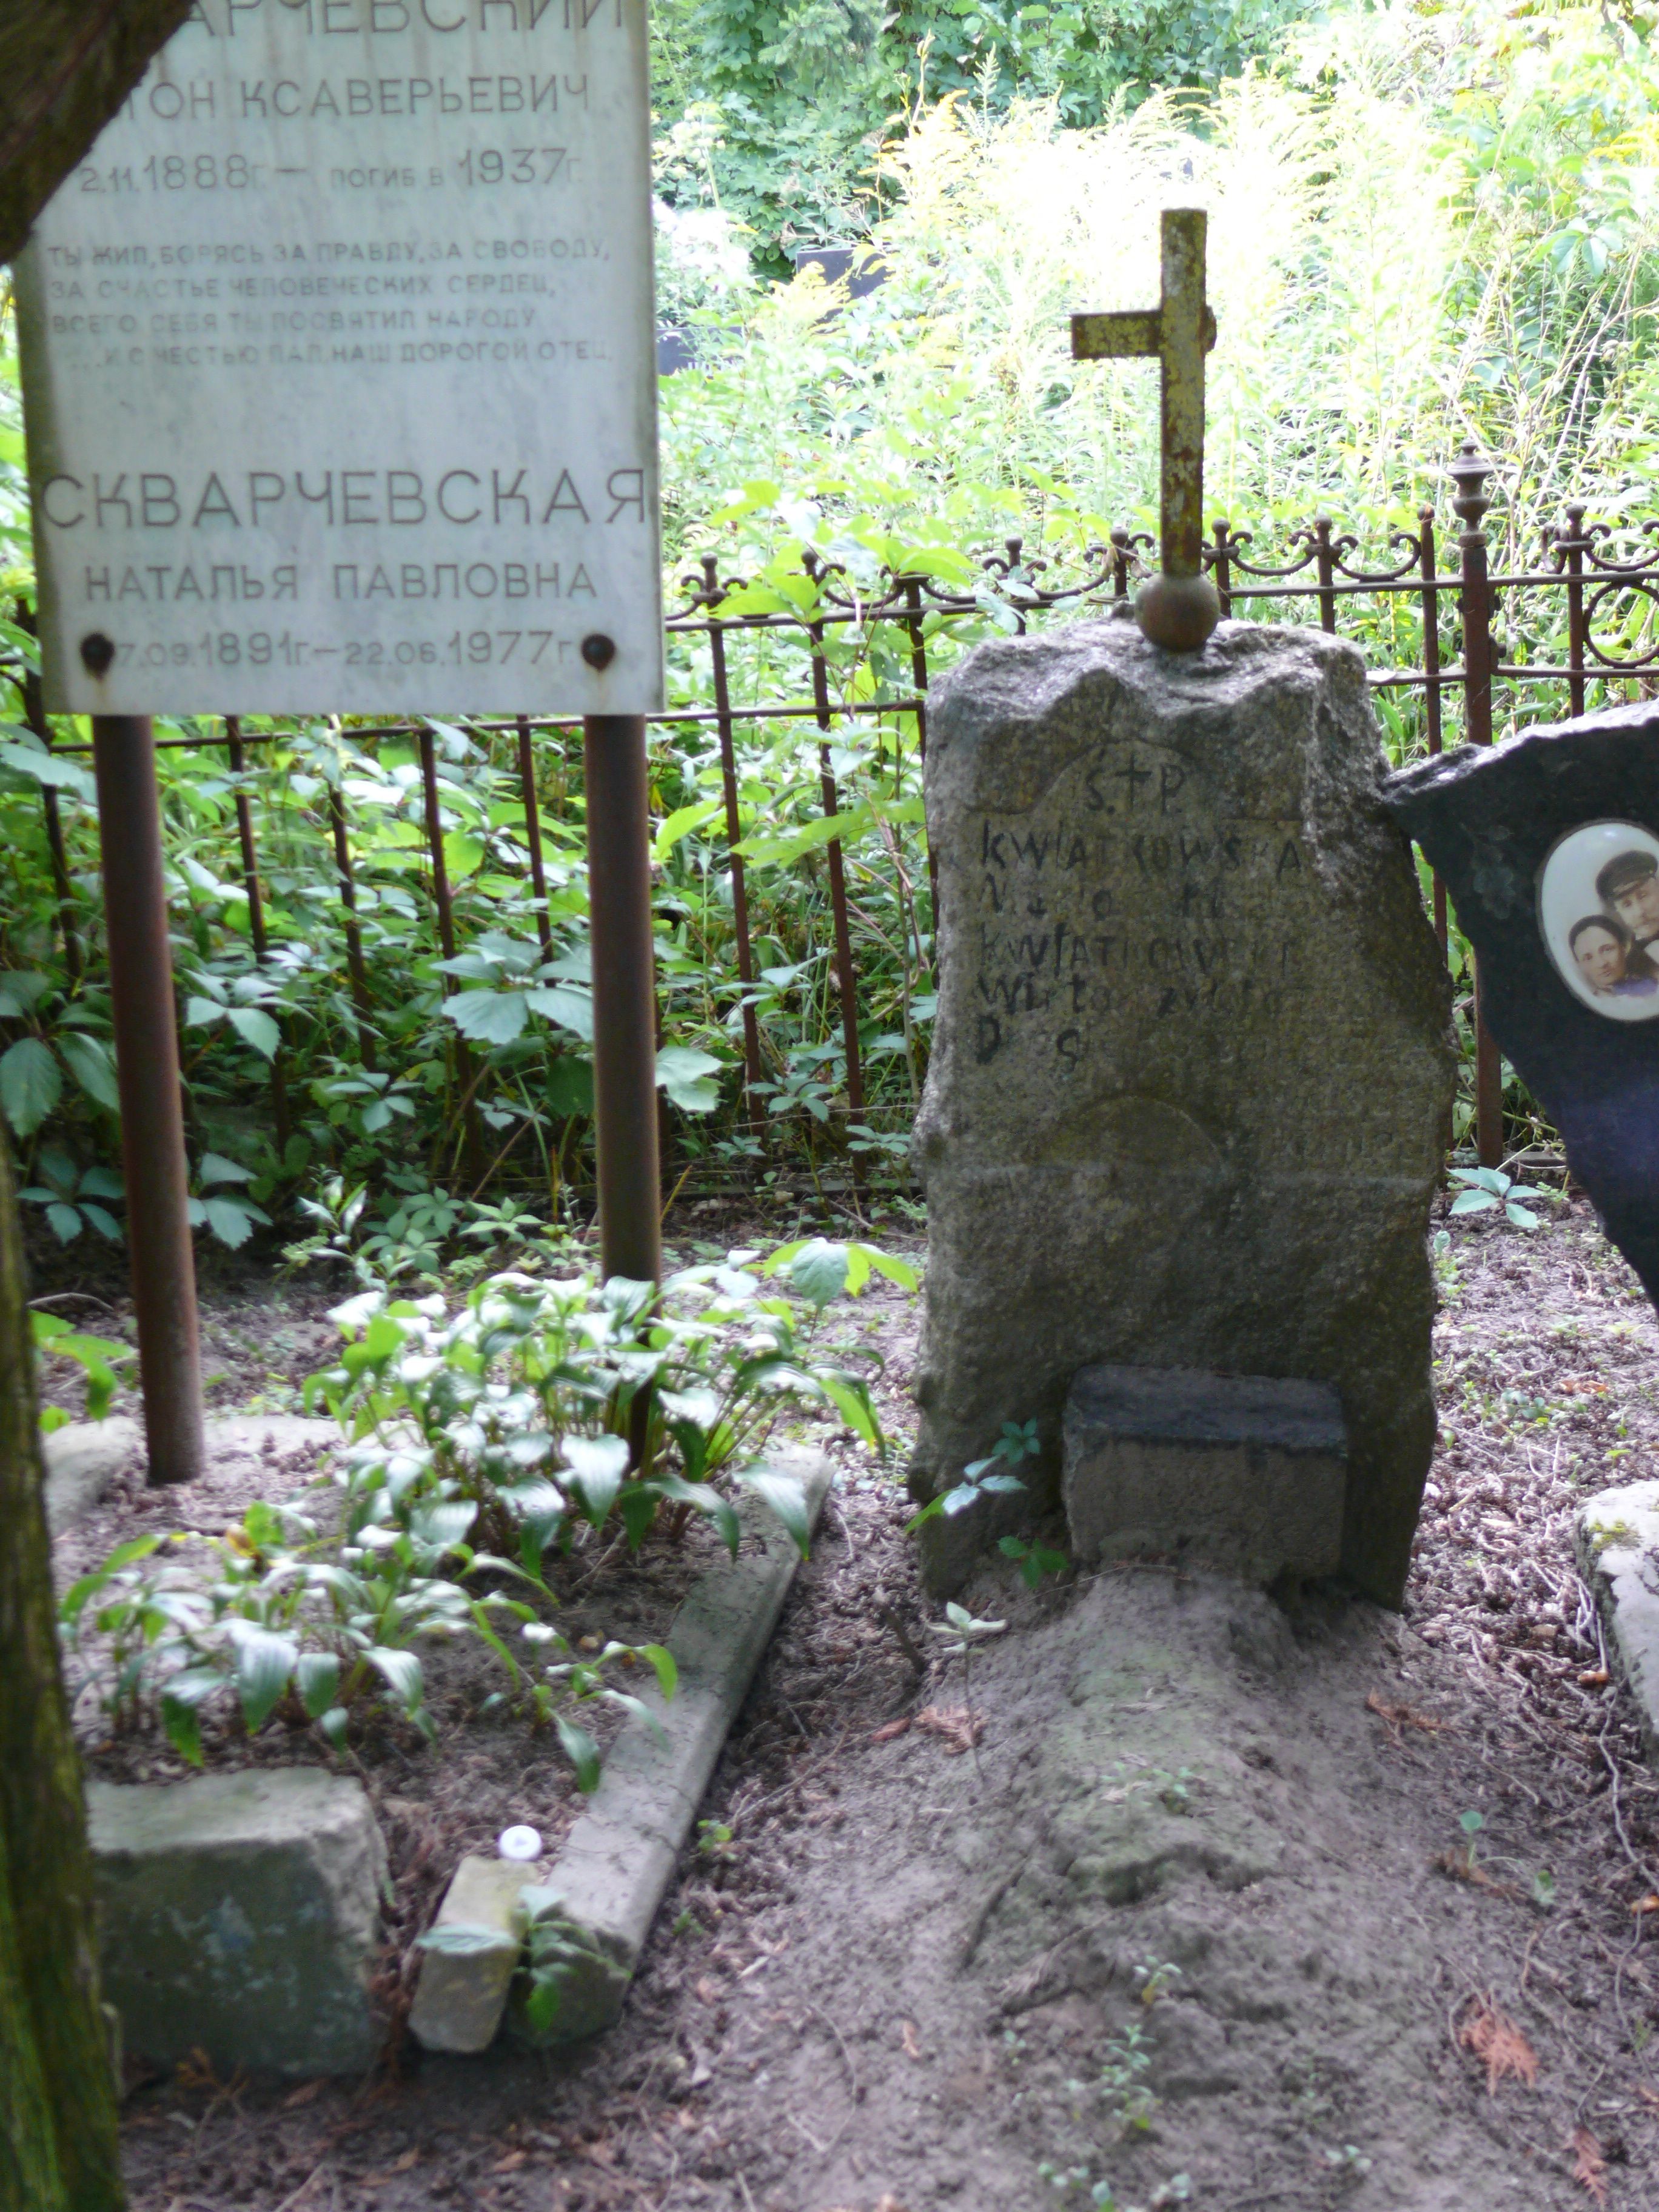 Tombstone of N. Kwiatowski; N. Kwiatowska